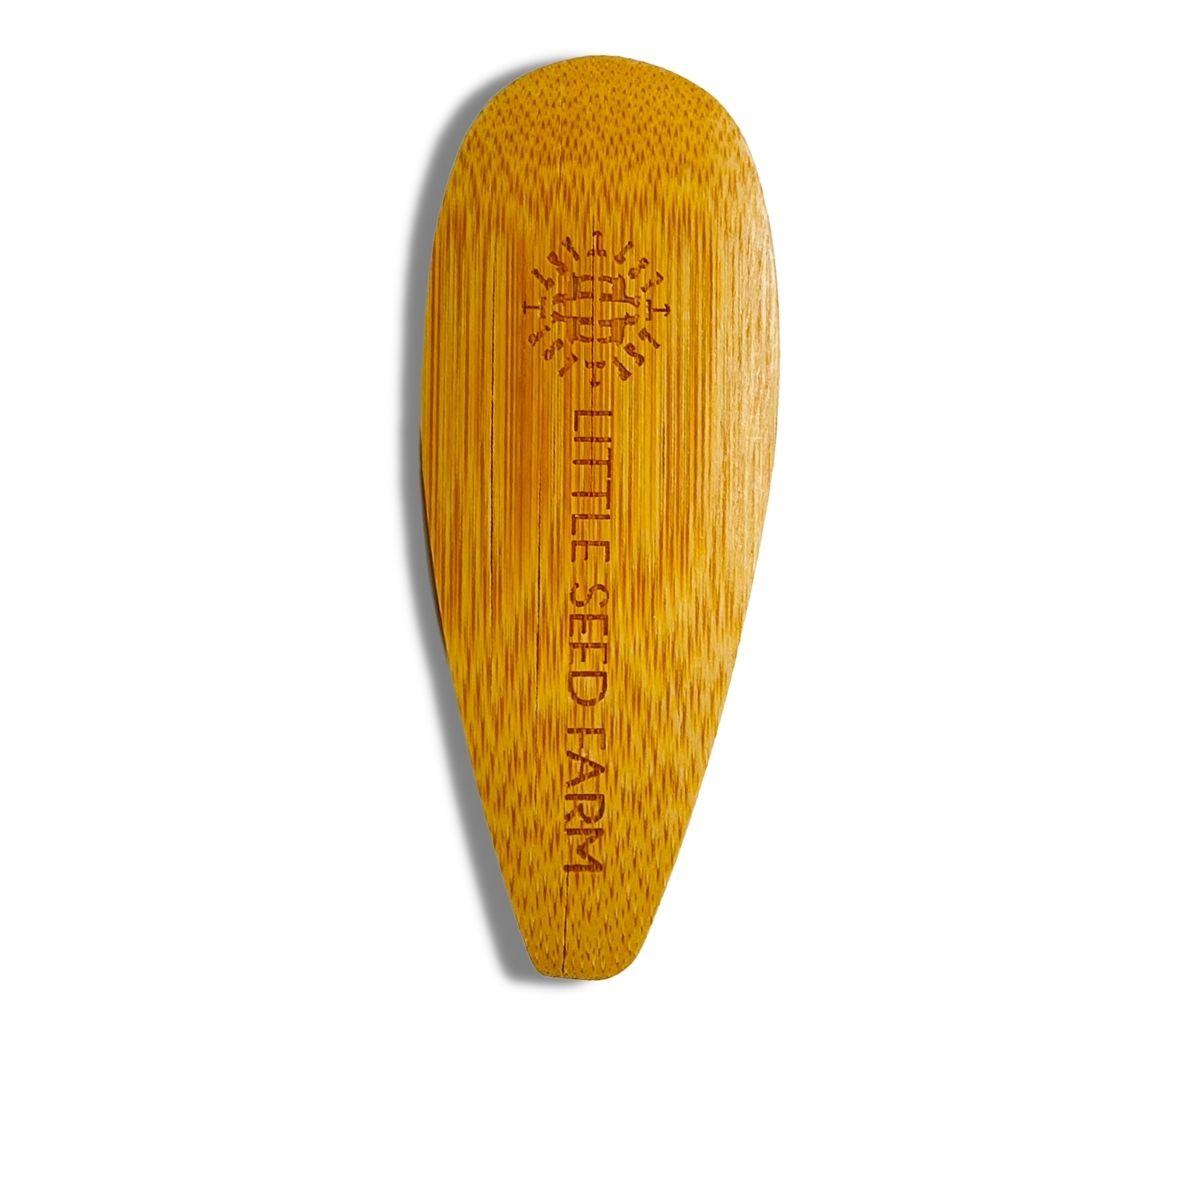 Little seed farm bamboo deodorant applicator